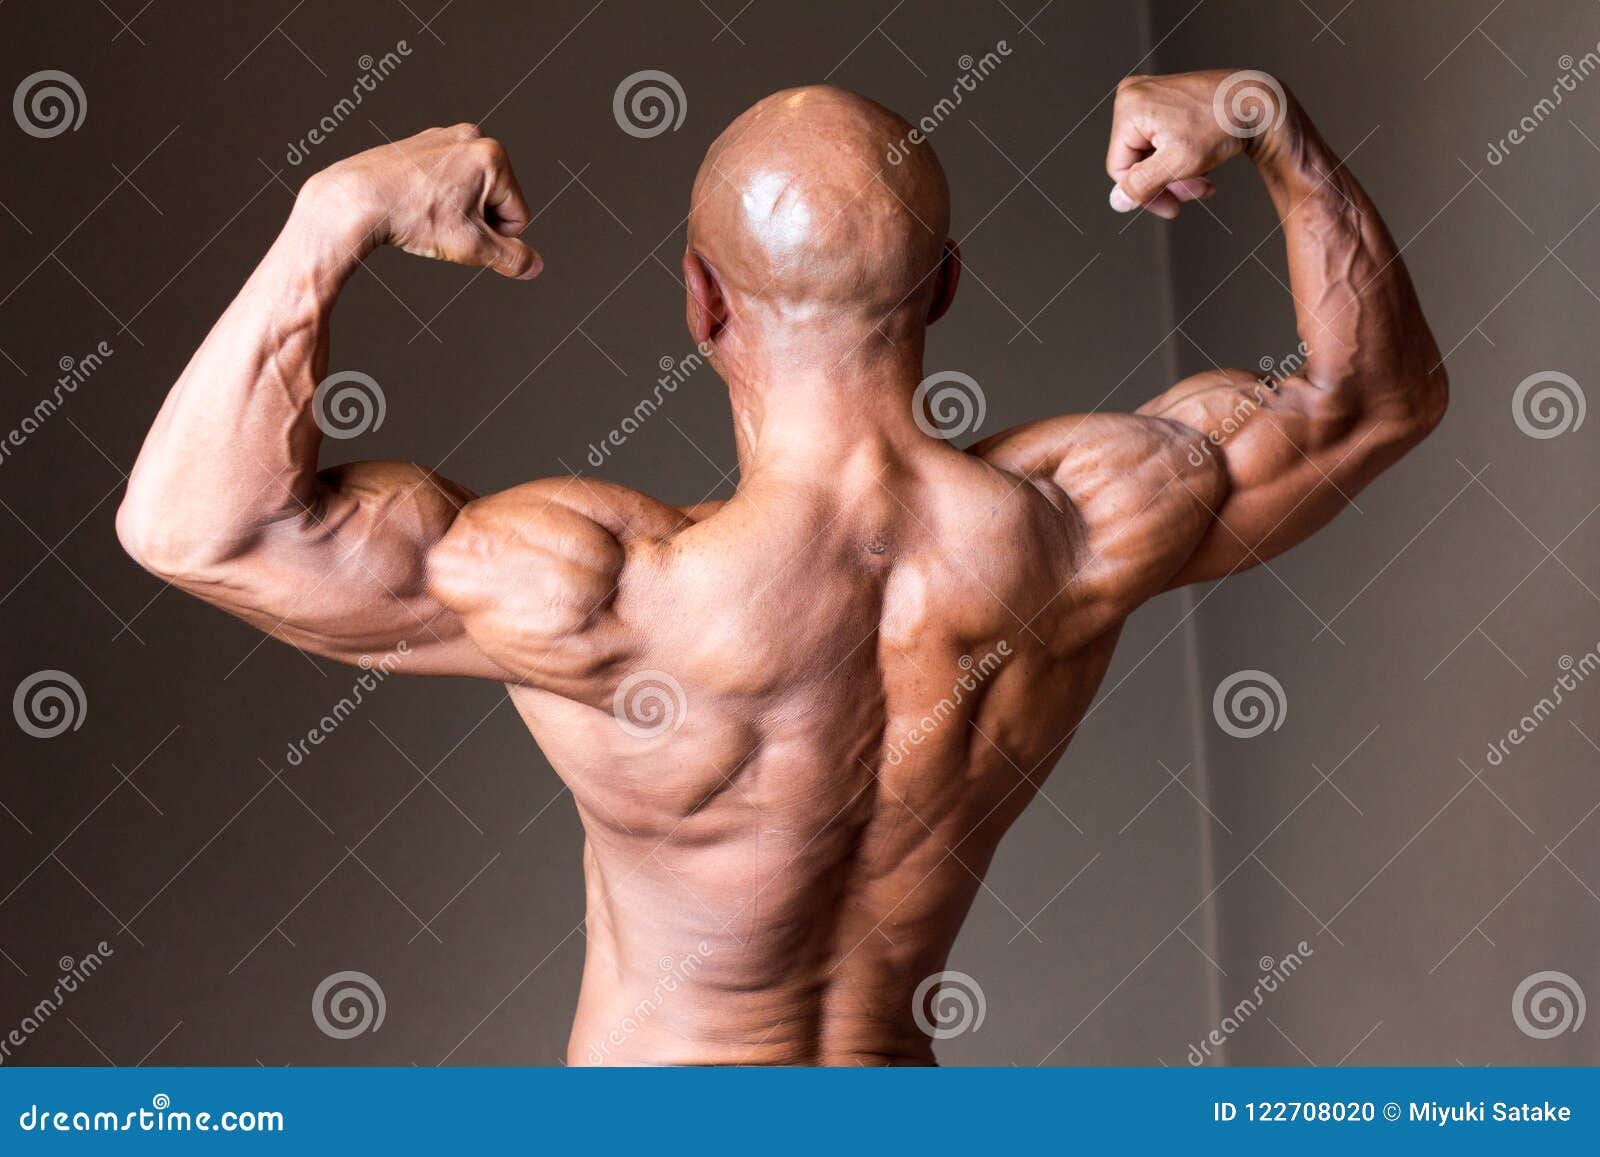 Japanese Hot Bulky Bald Head Male 50s Bodybuider Stock Photo - Image of  bodybuilder, athlete: 122708020